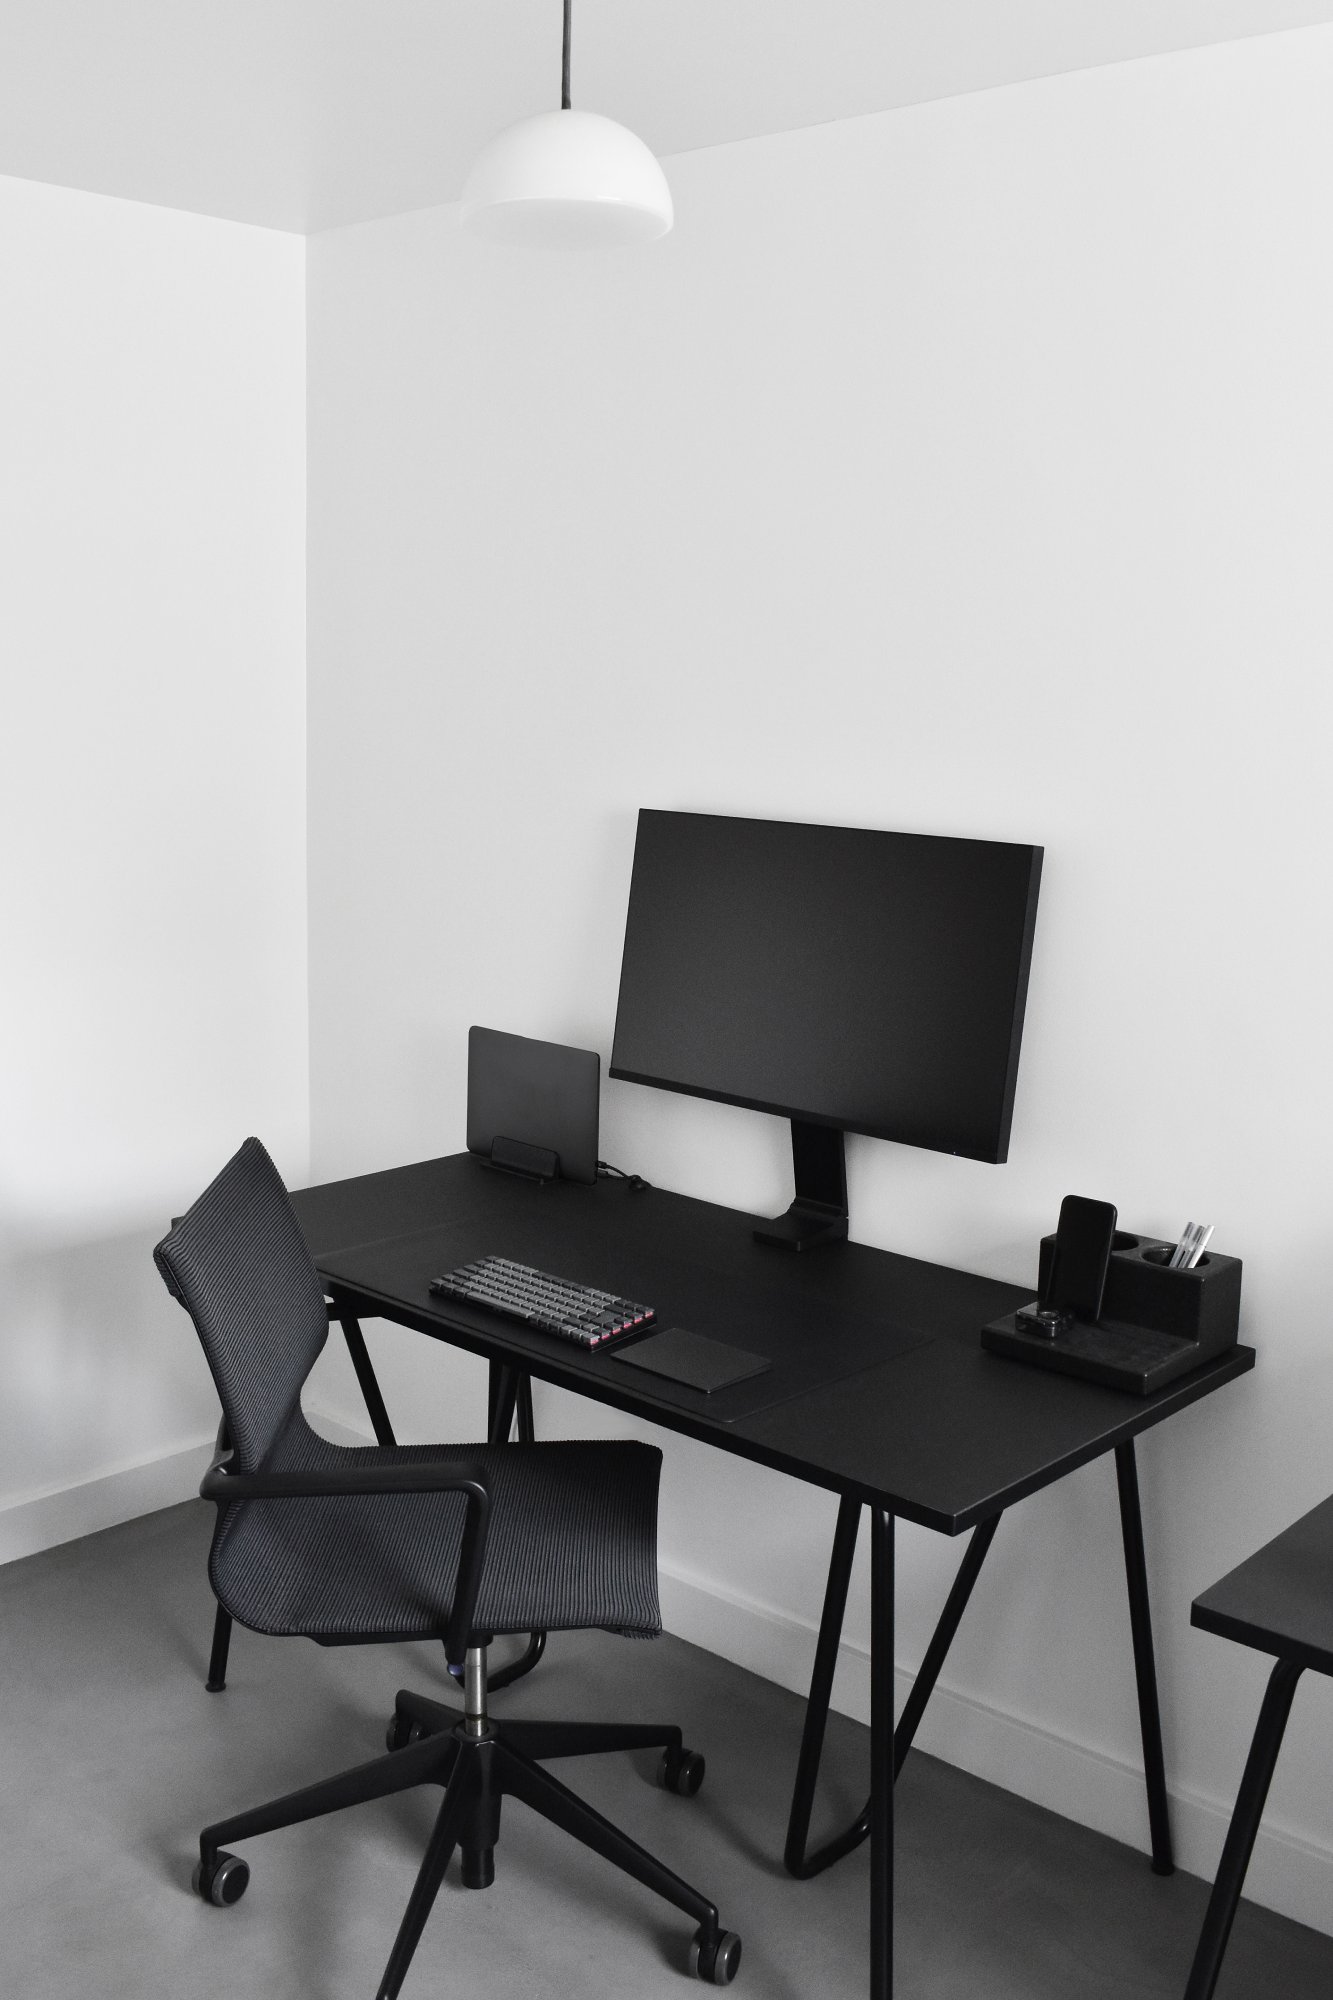 A minimalist home office desk setup